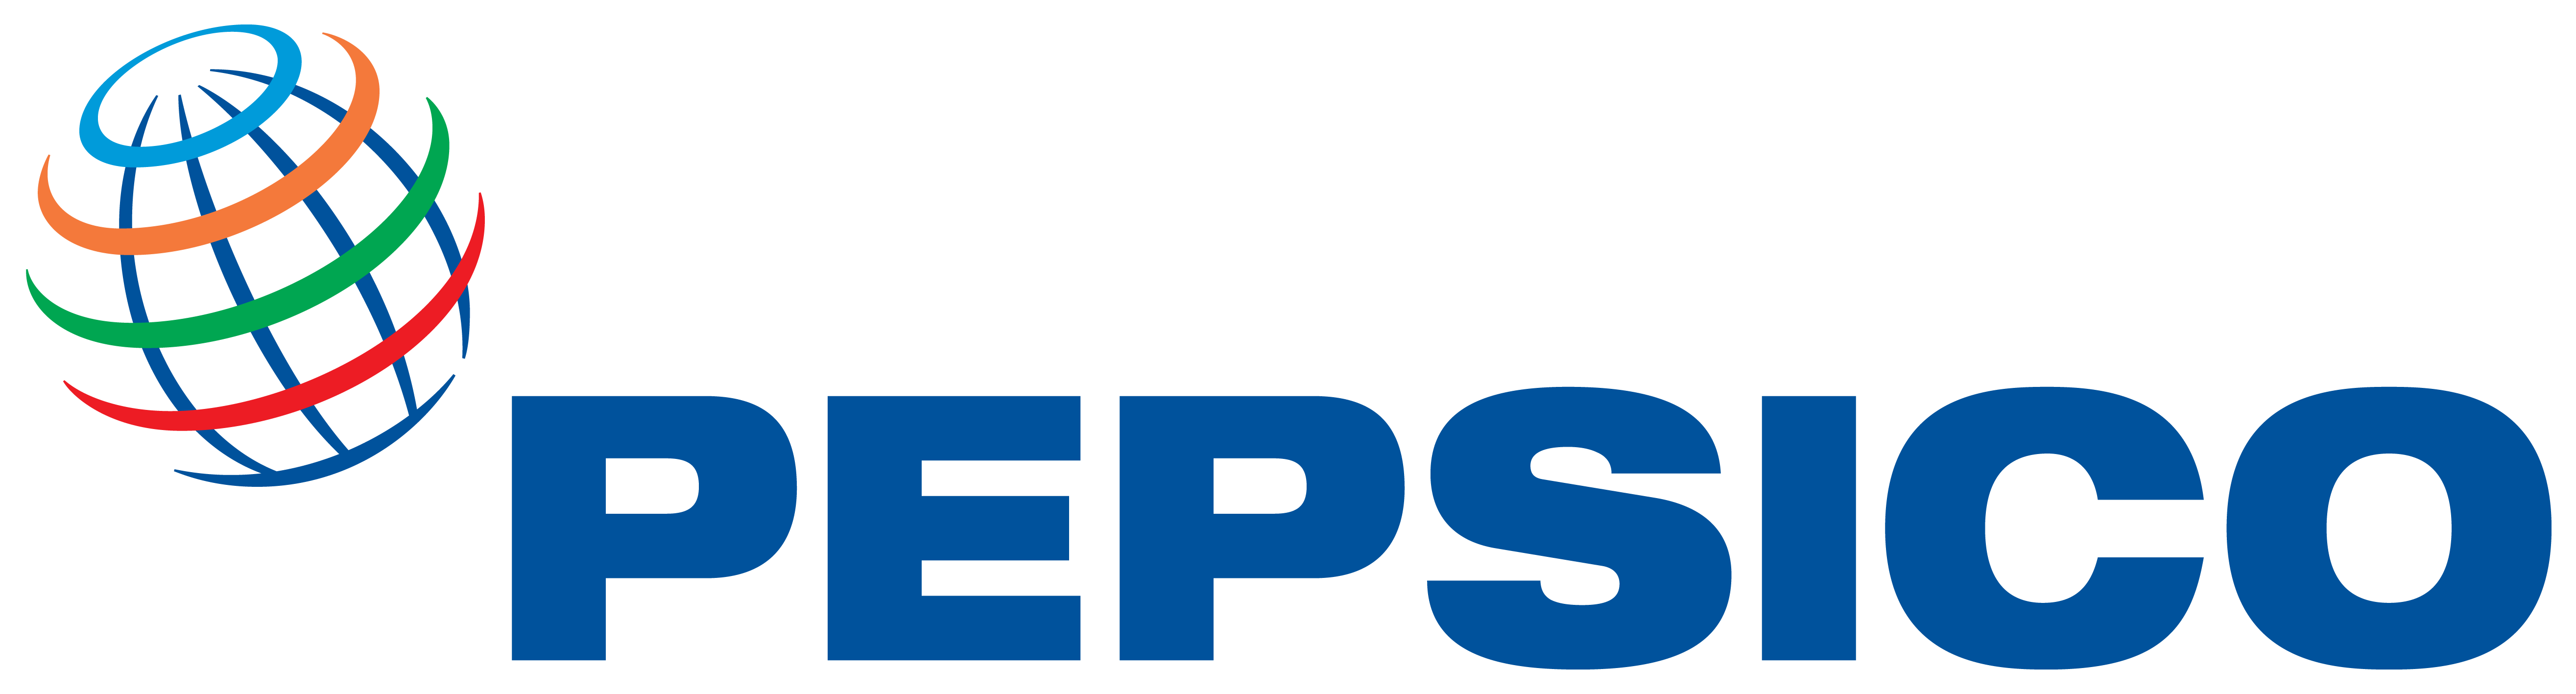 logo-pepsico-png